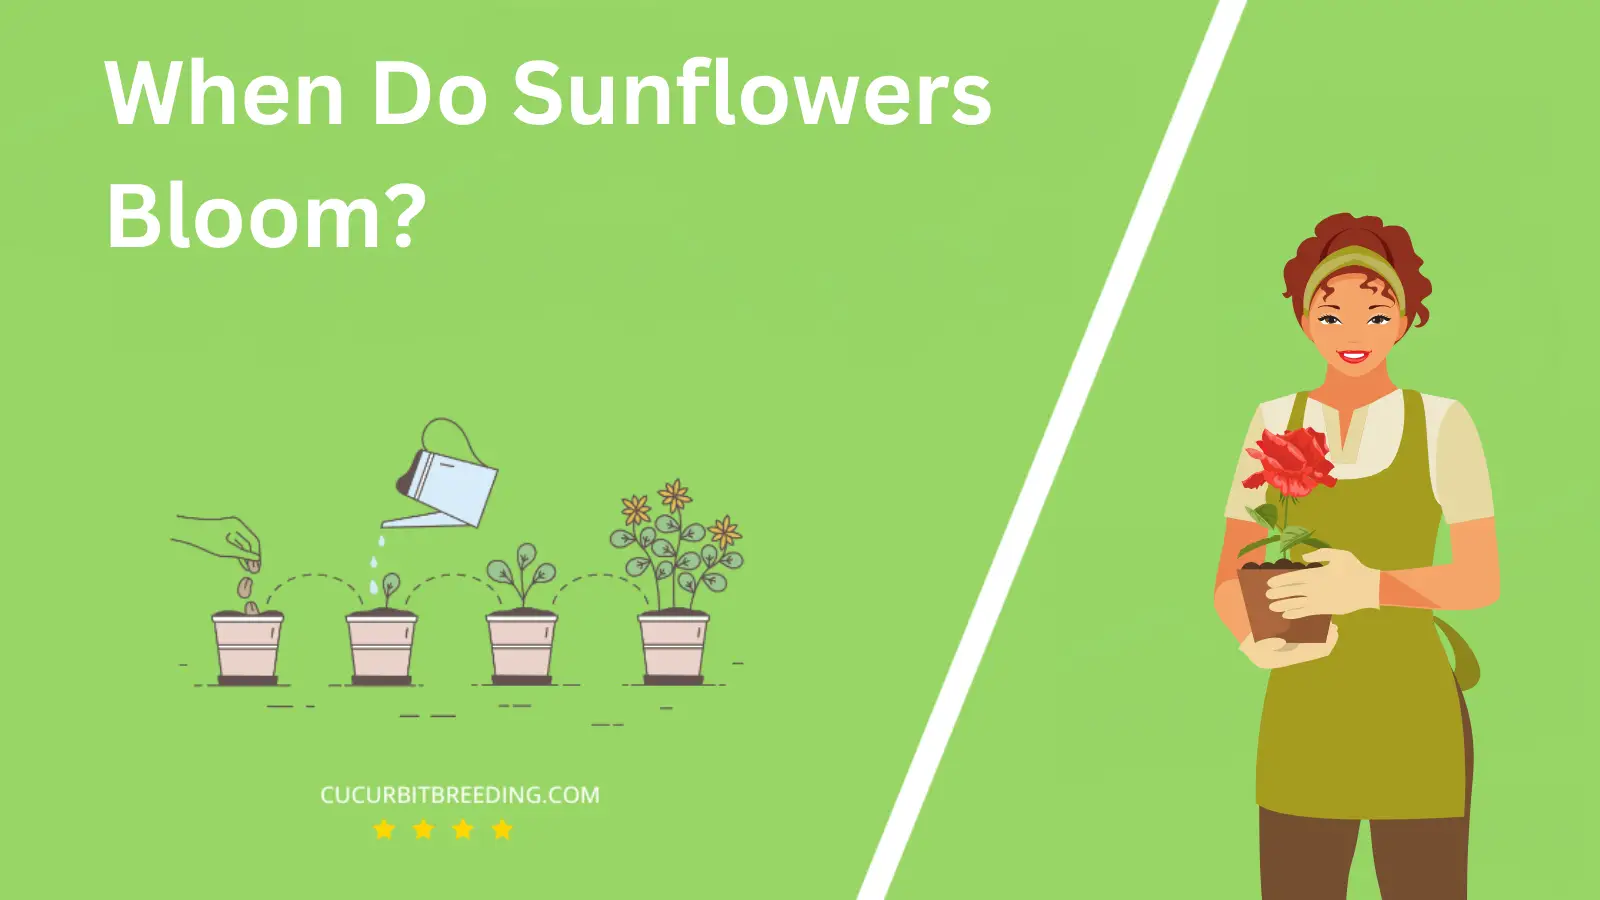 When Do Sunflowers Bloom?